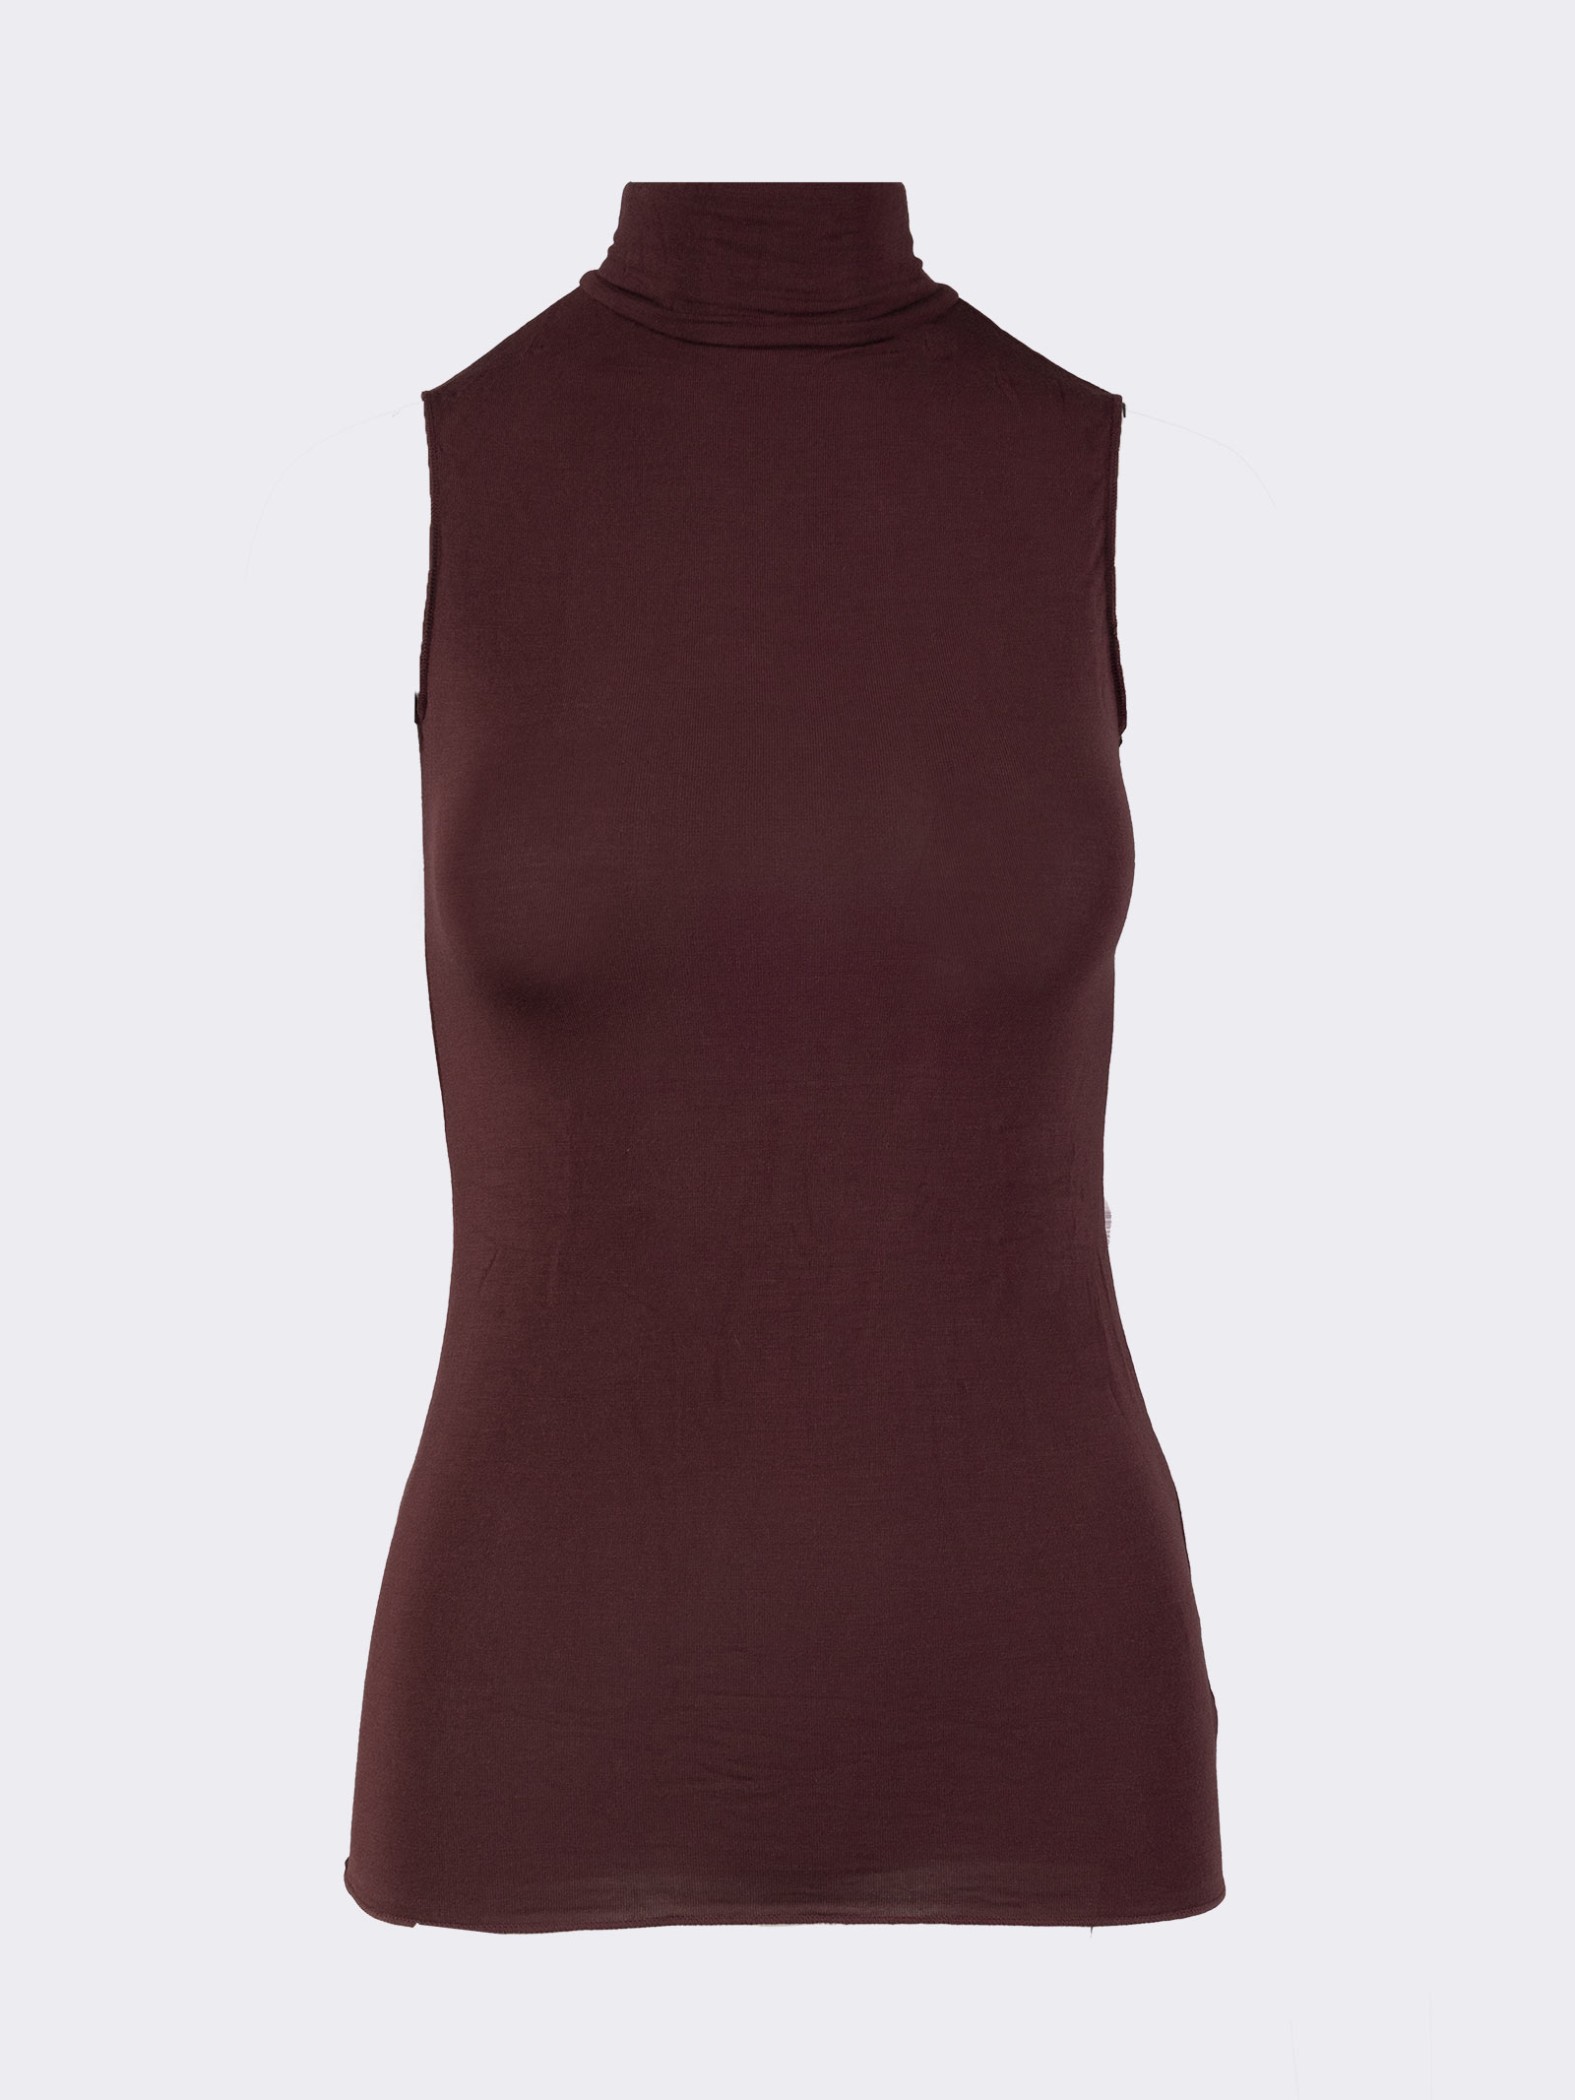 Women's Cashmere and Modal Turtleneck Top, Elegant and Warm Underwear